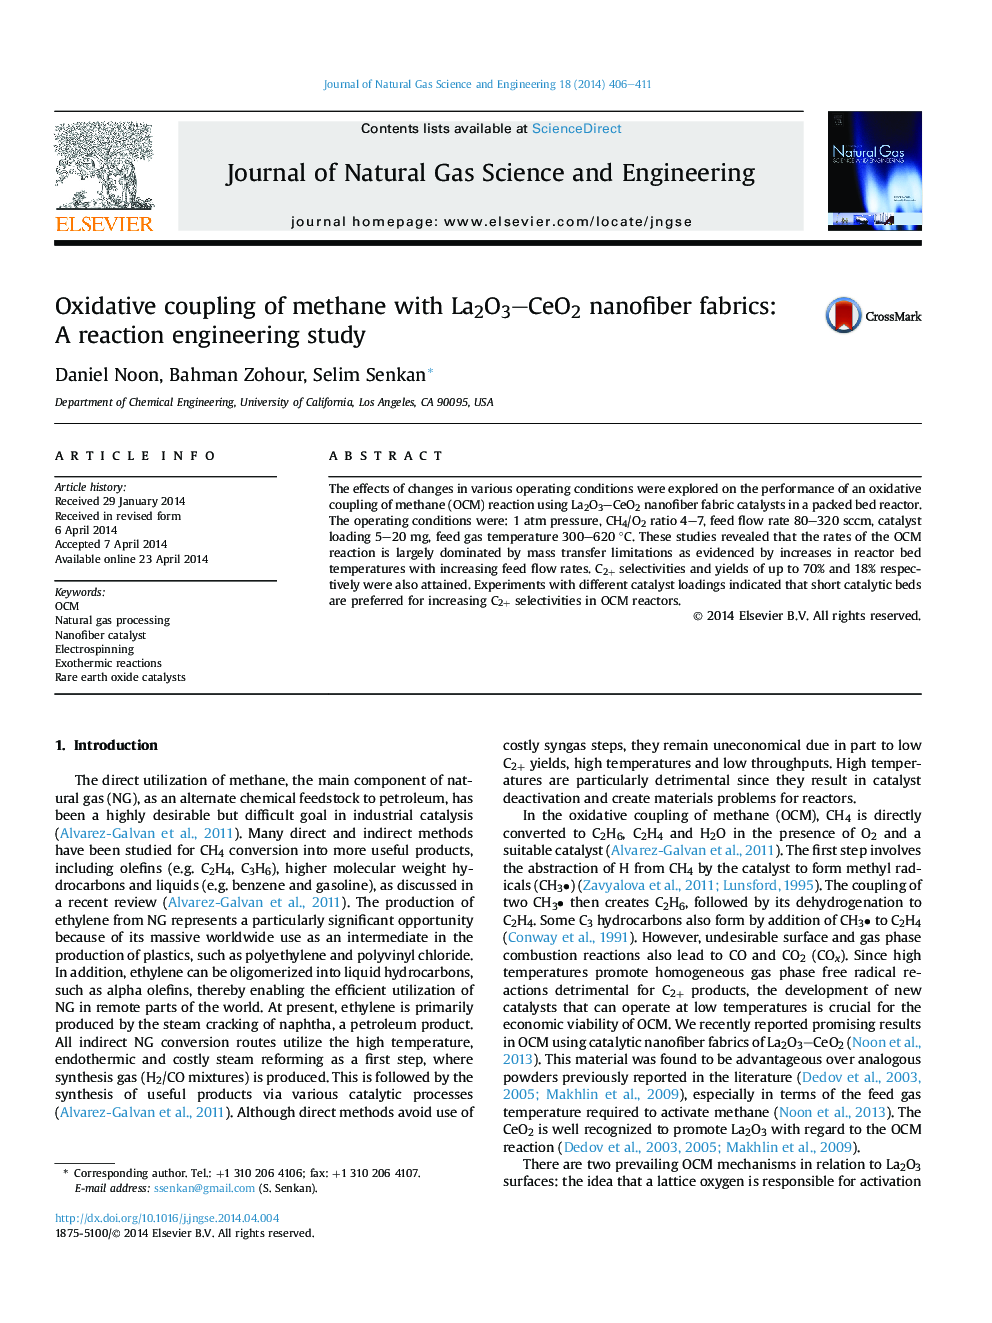 Oxidative coupling of methane with La2O3–CeO2 nanofiber fabrics: A reaction engineering study